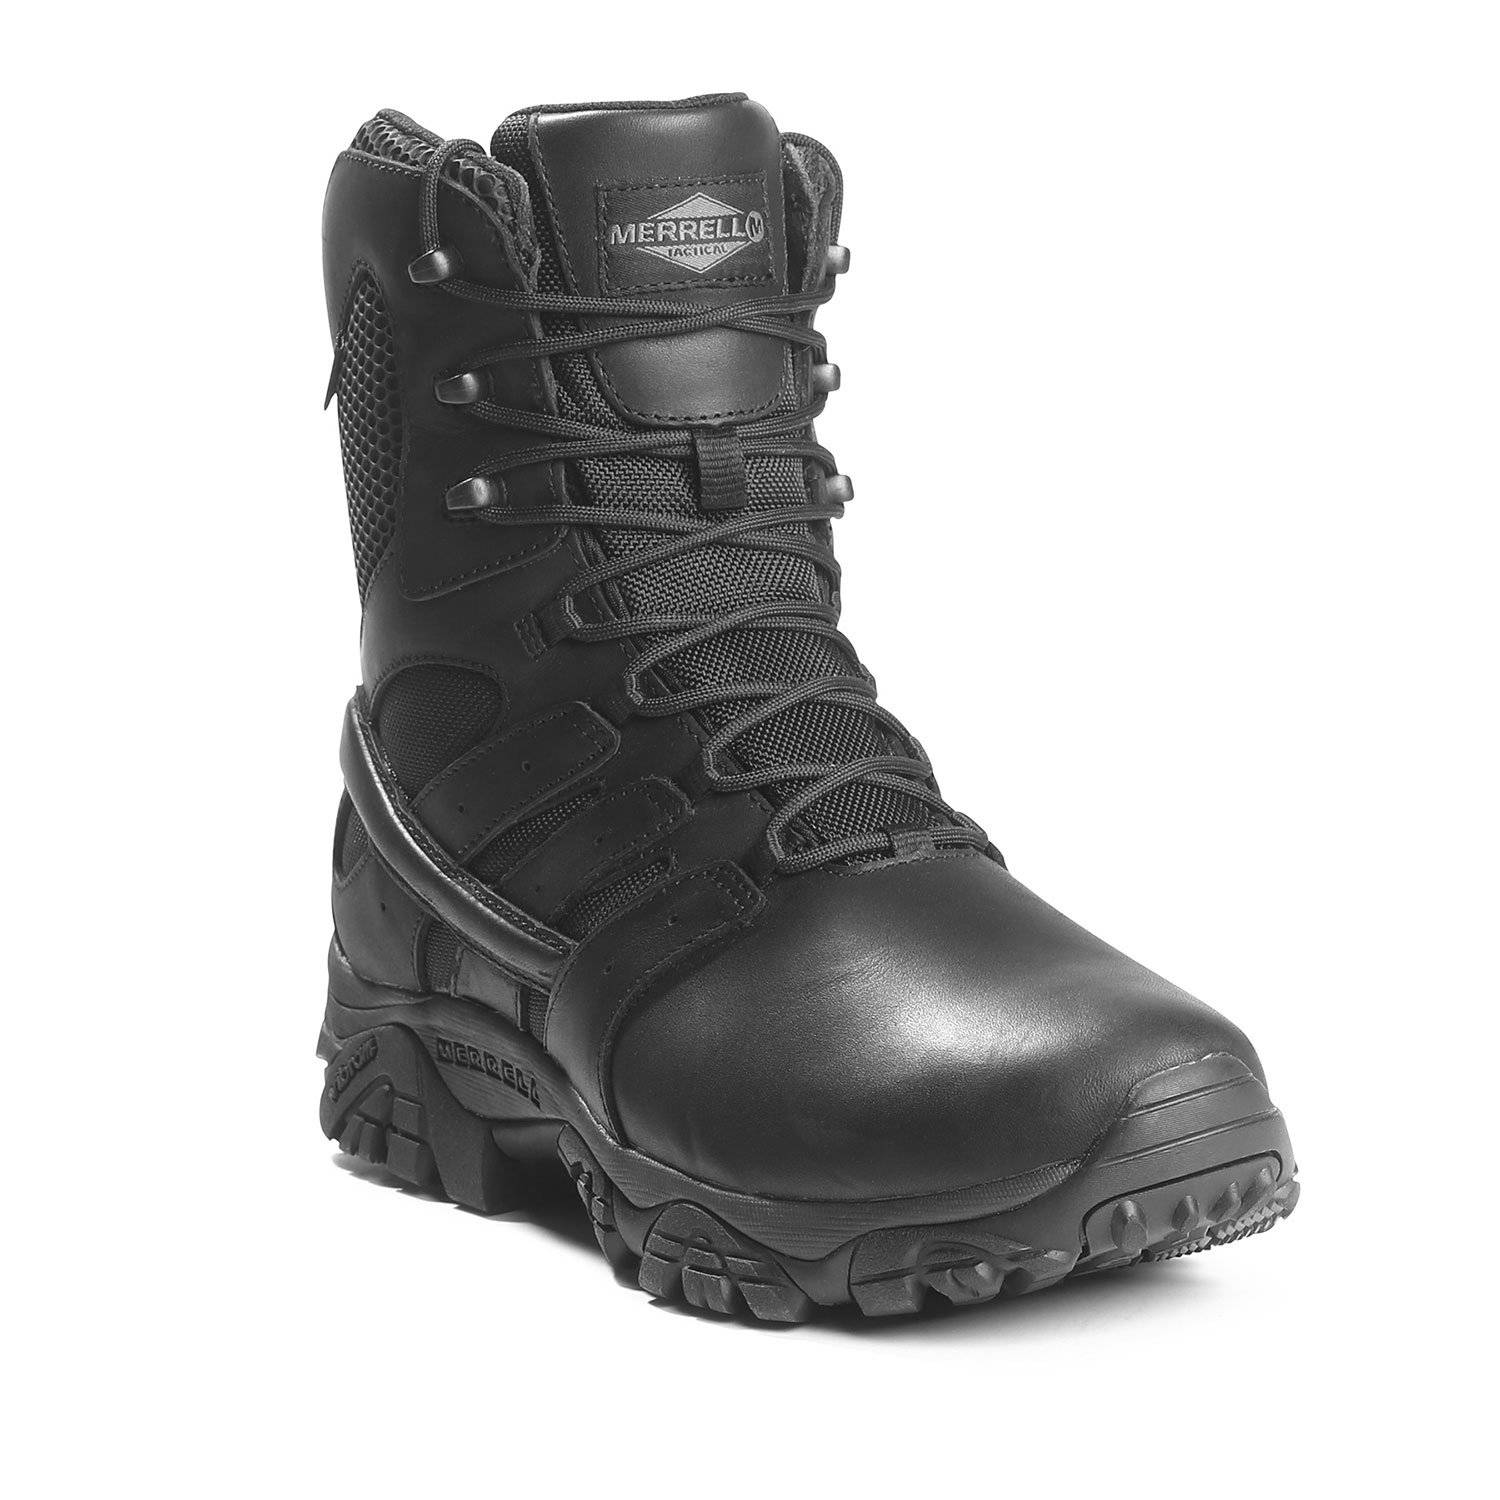 8 inch waterproof hiking boots